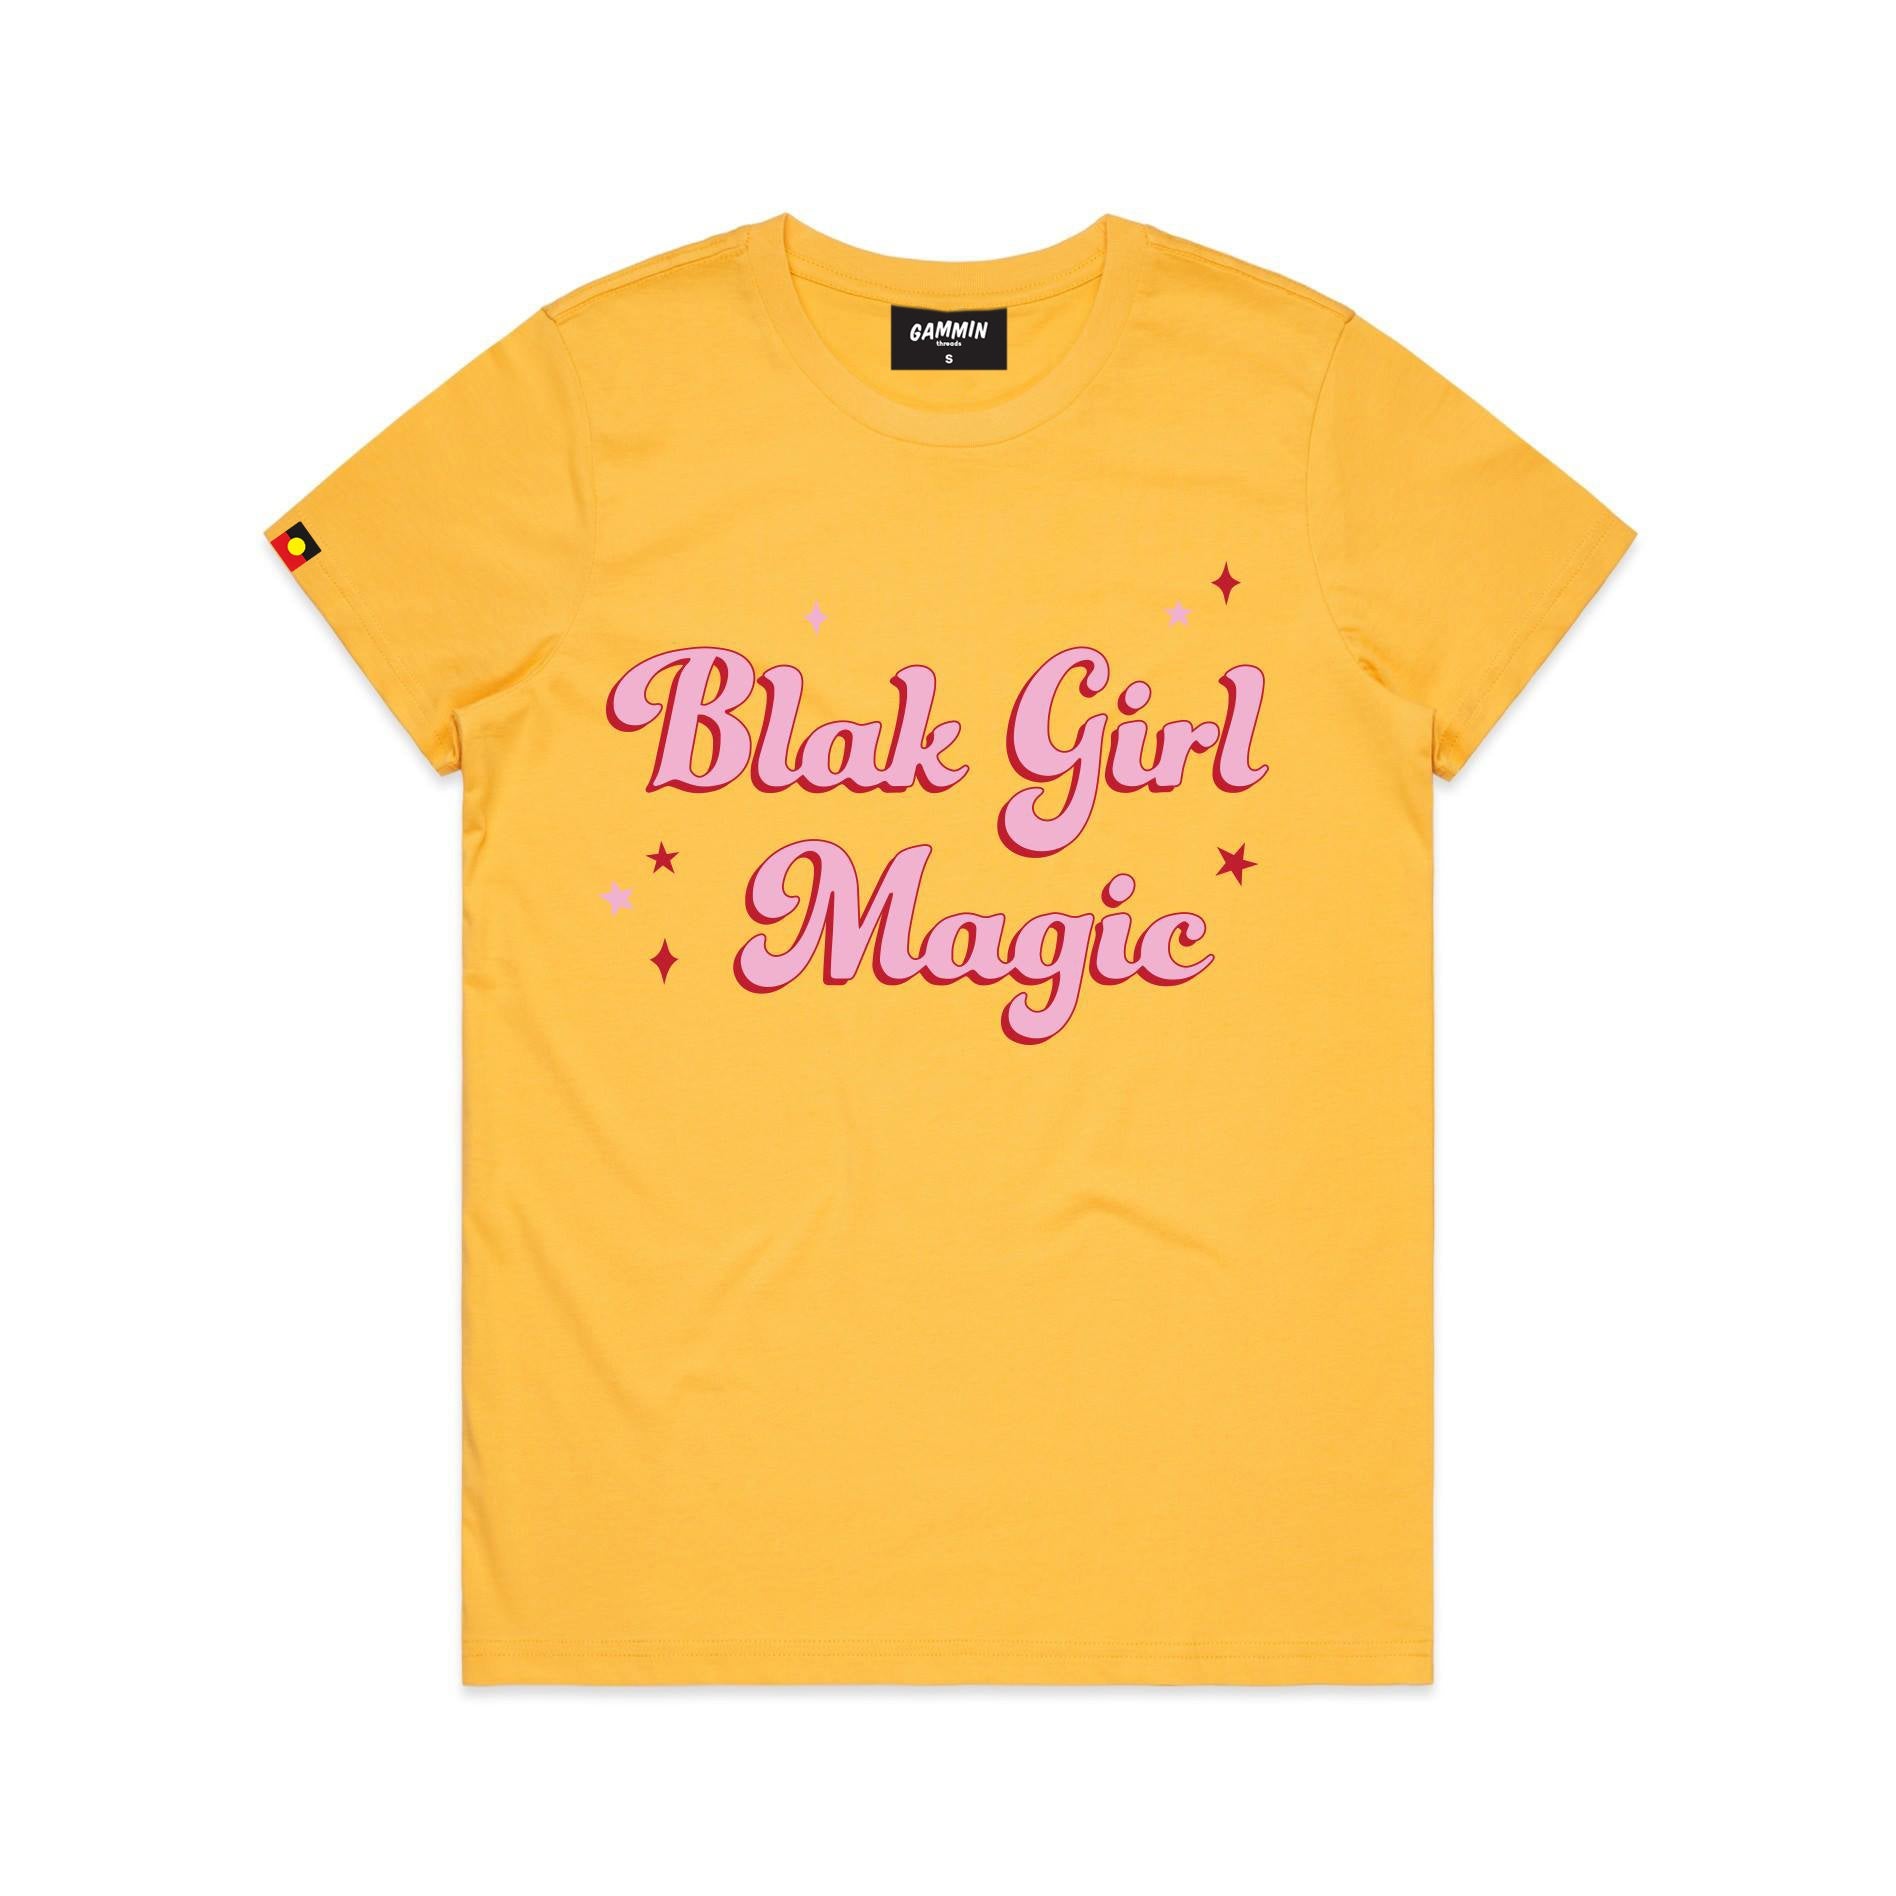 Blak girl magic vintage yellow tee